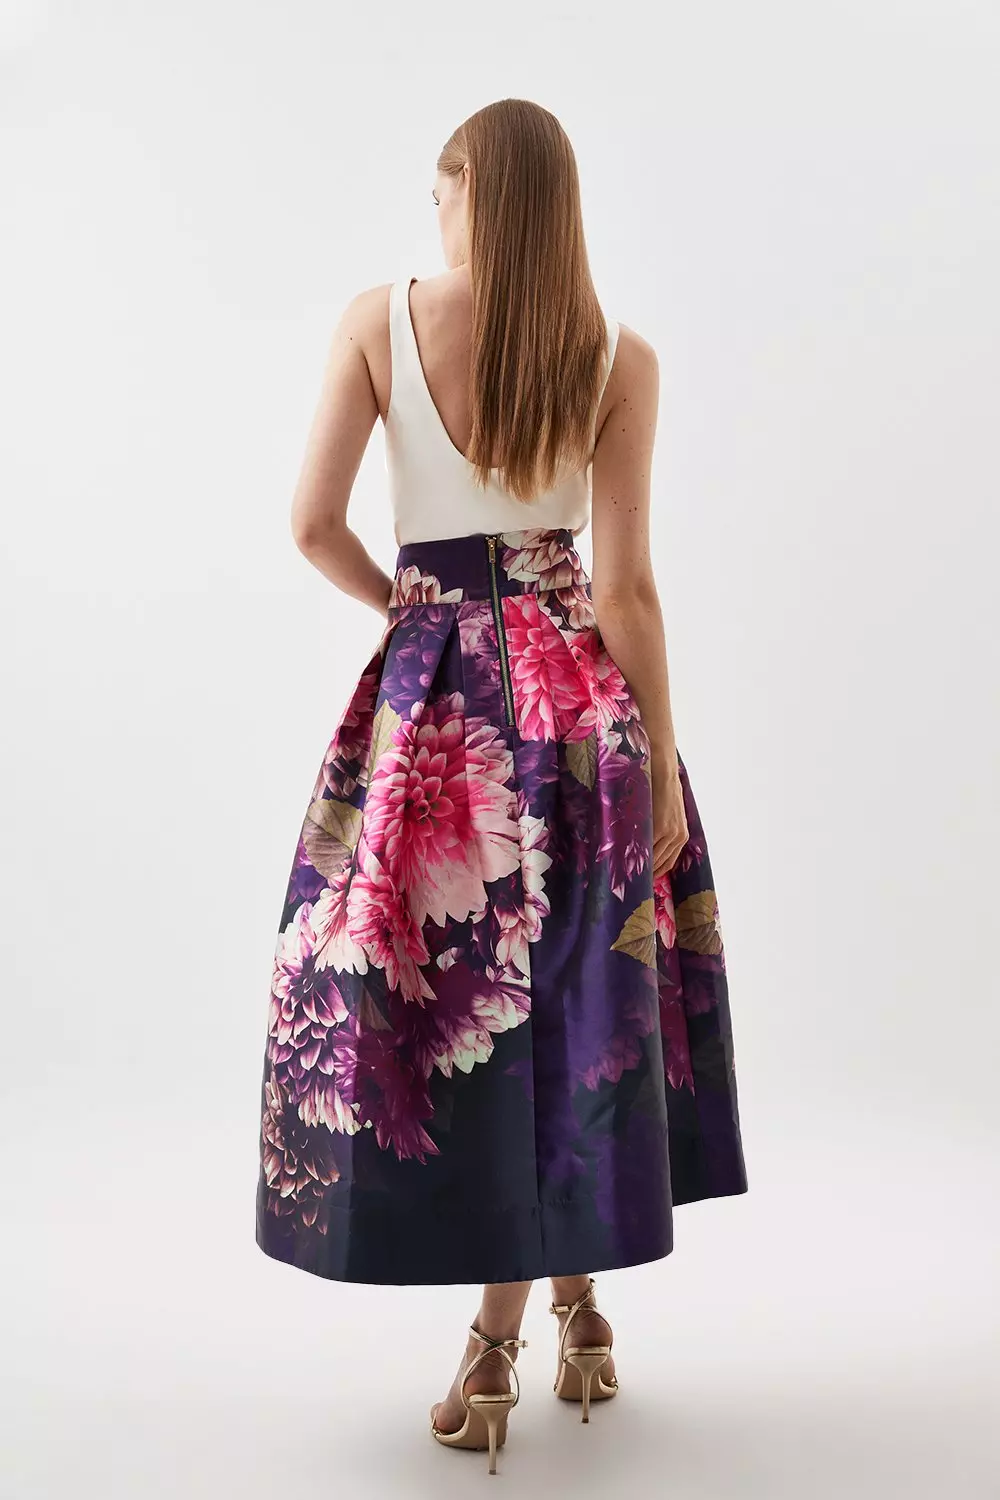 Exploding Floral | Prom Millen Karen Skirt Maxi